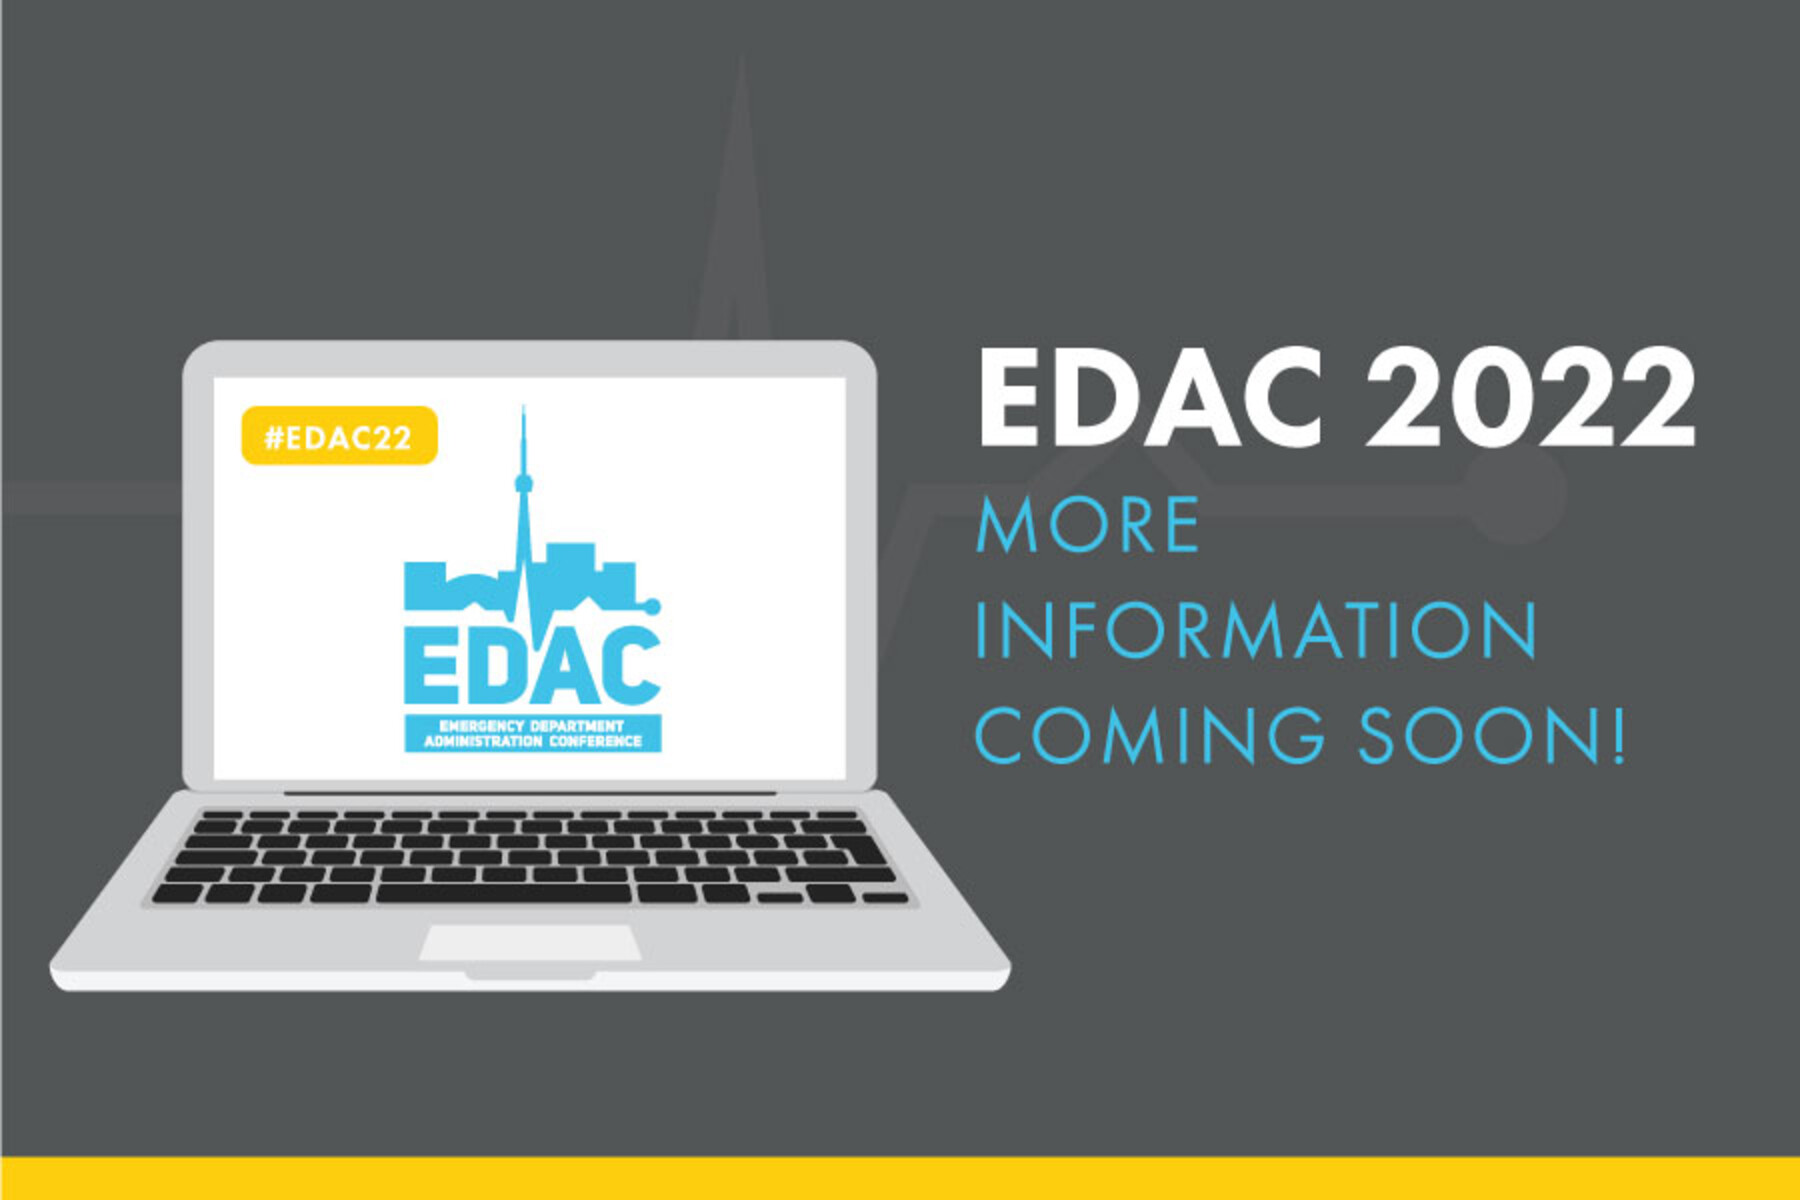 EDAC 2022 More Information Coming Soon!